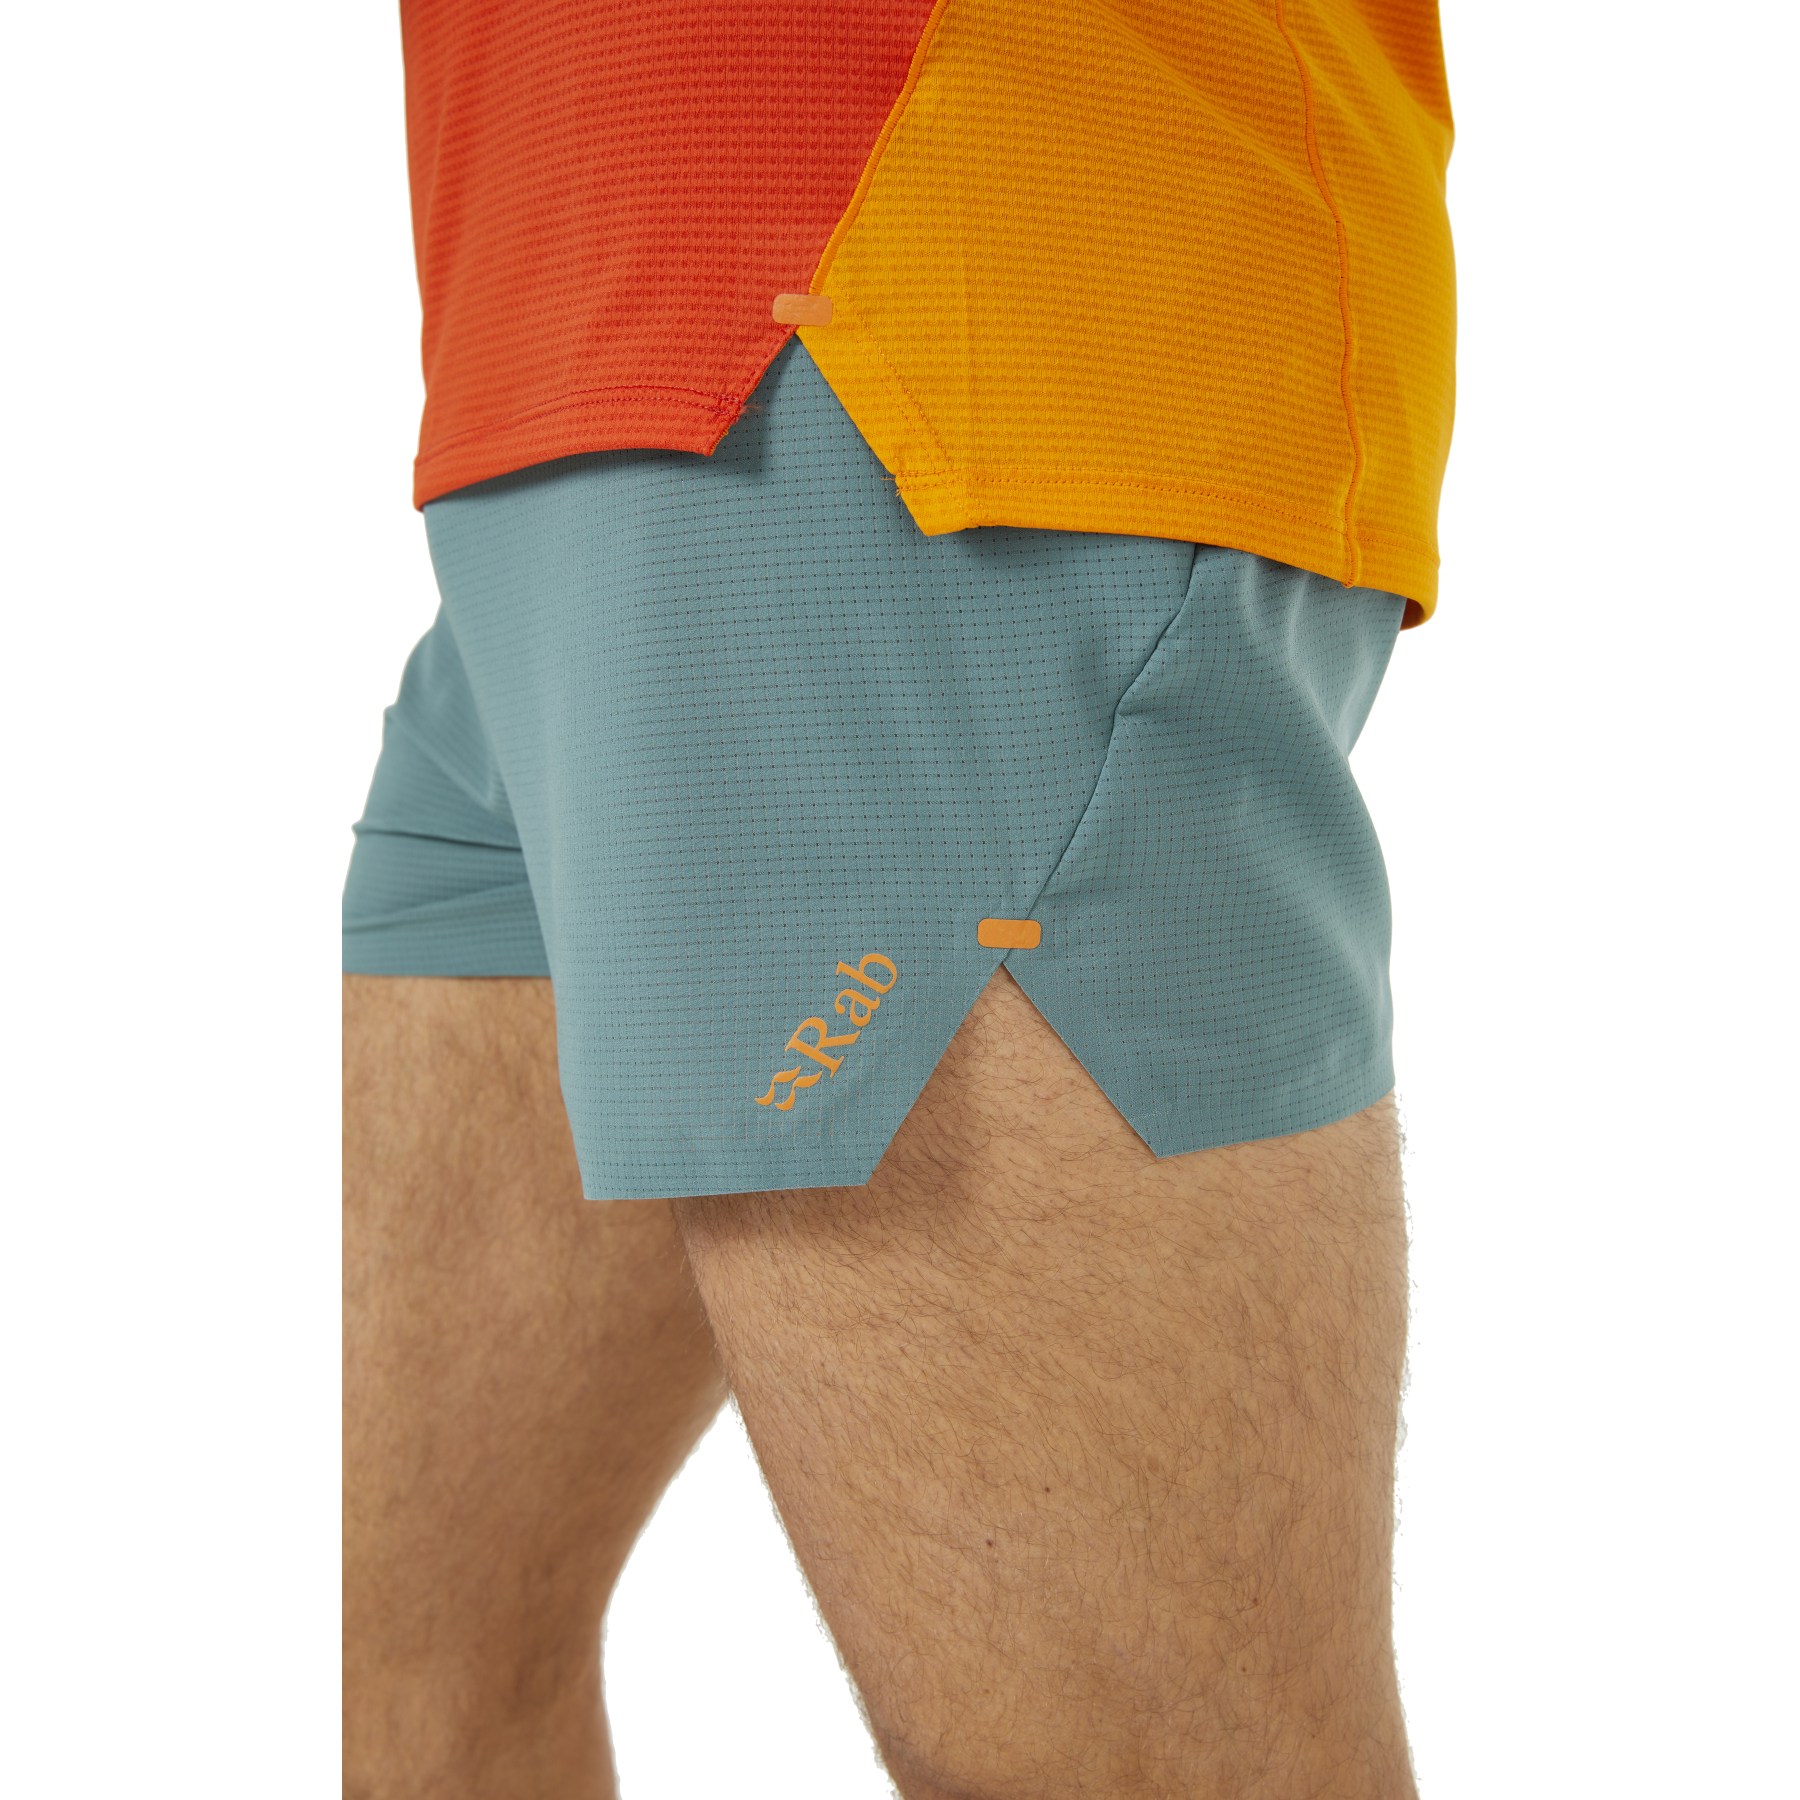 Men's Talus Ultra Shorts